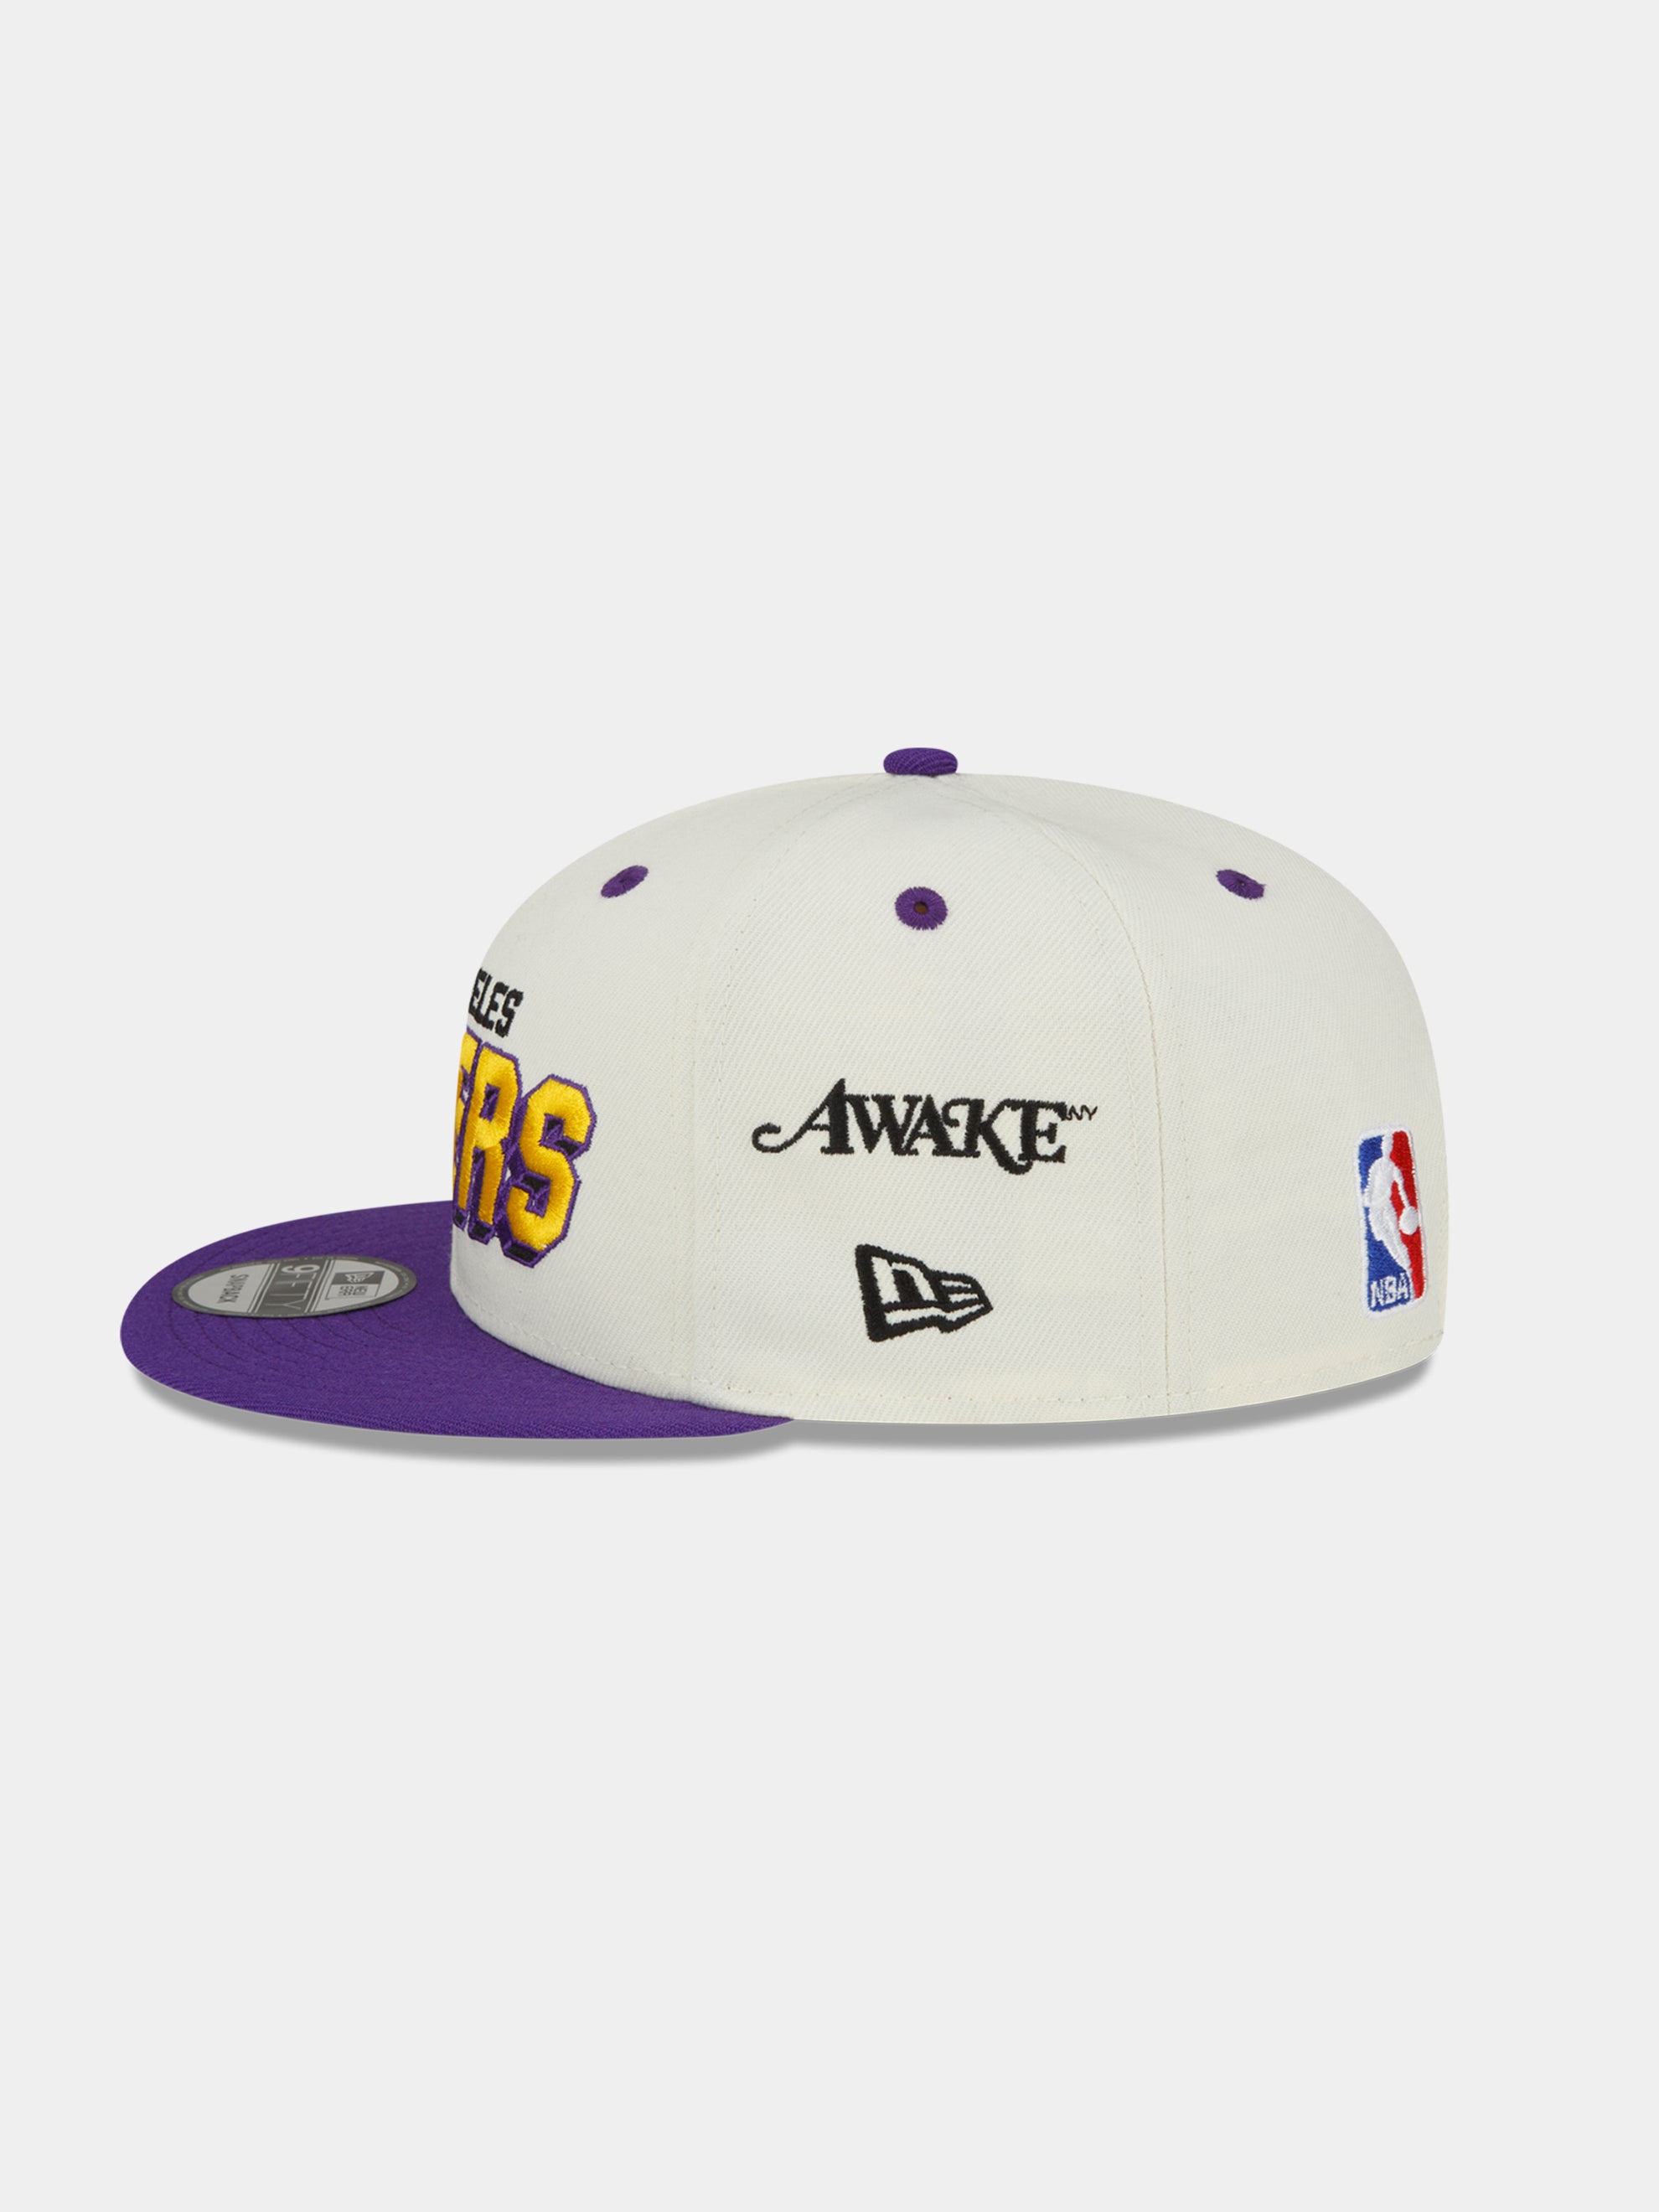 AWAKE x NE x NBA LAKERS HAT (Multi)